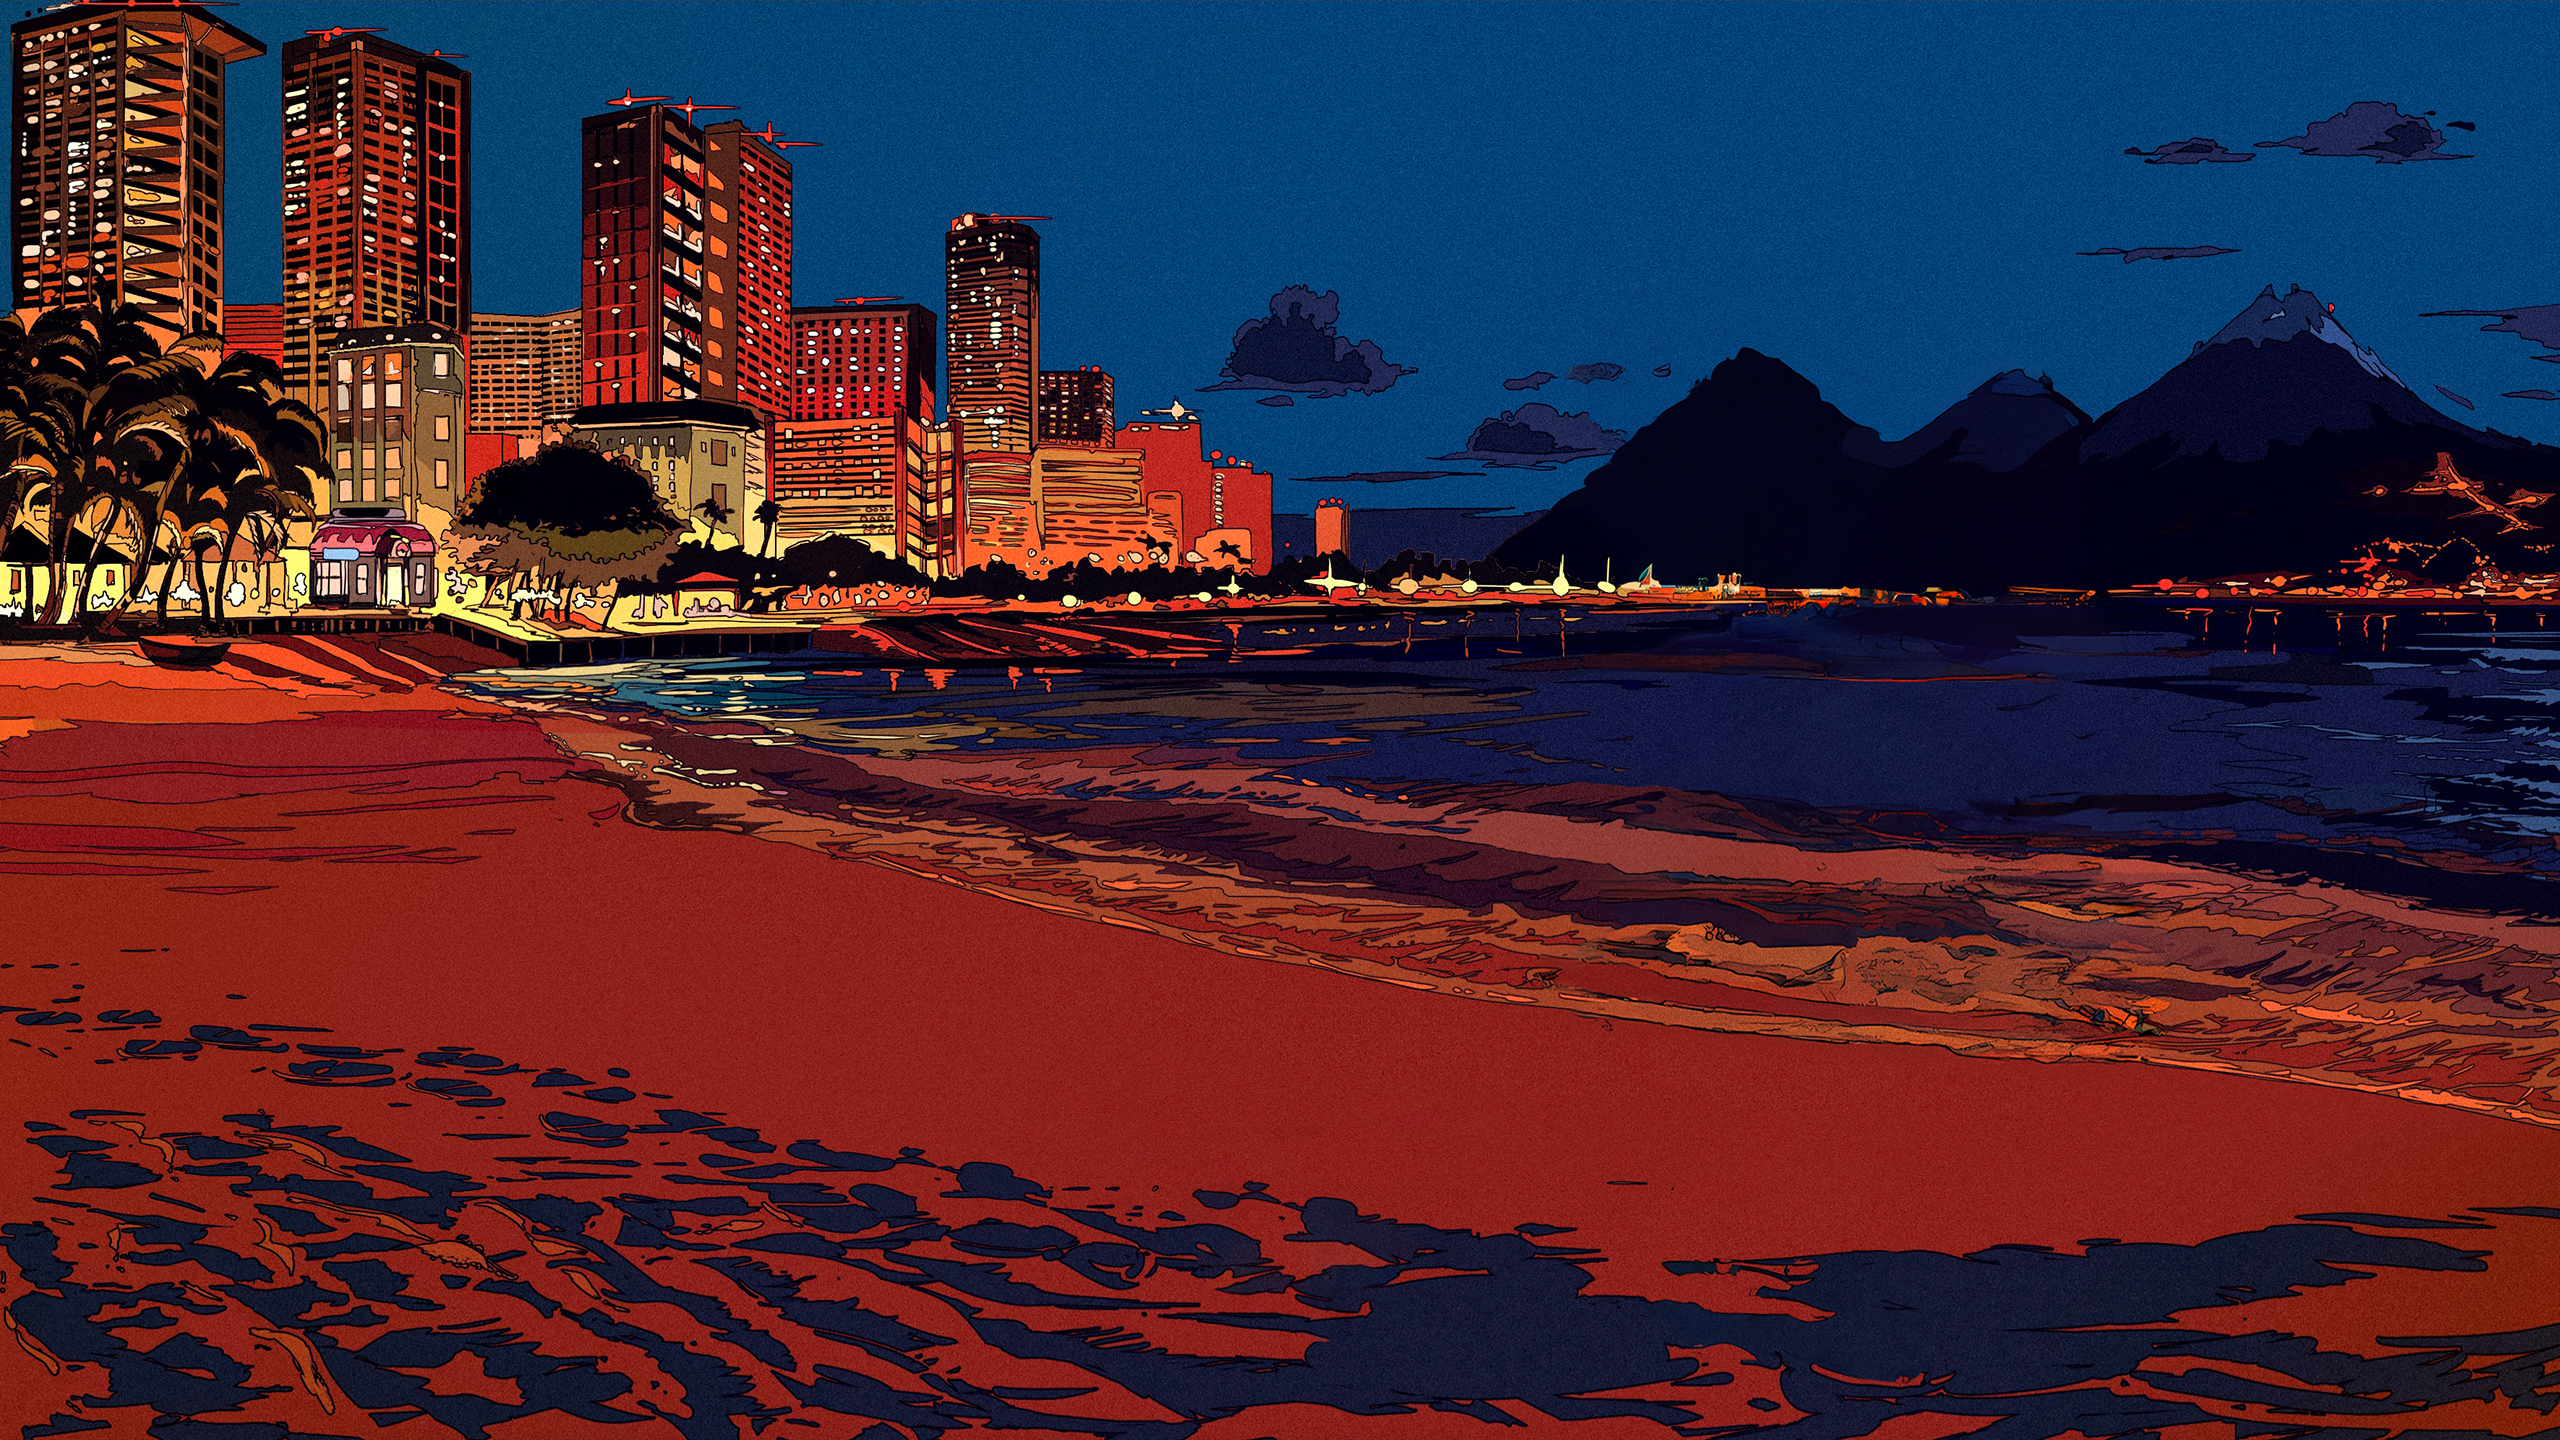 1980s Japanese Art Graphic Design Line Art Vibrant Colorful Summer Digital Art Water Beach 2560x1440